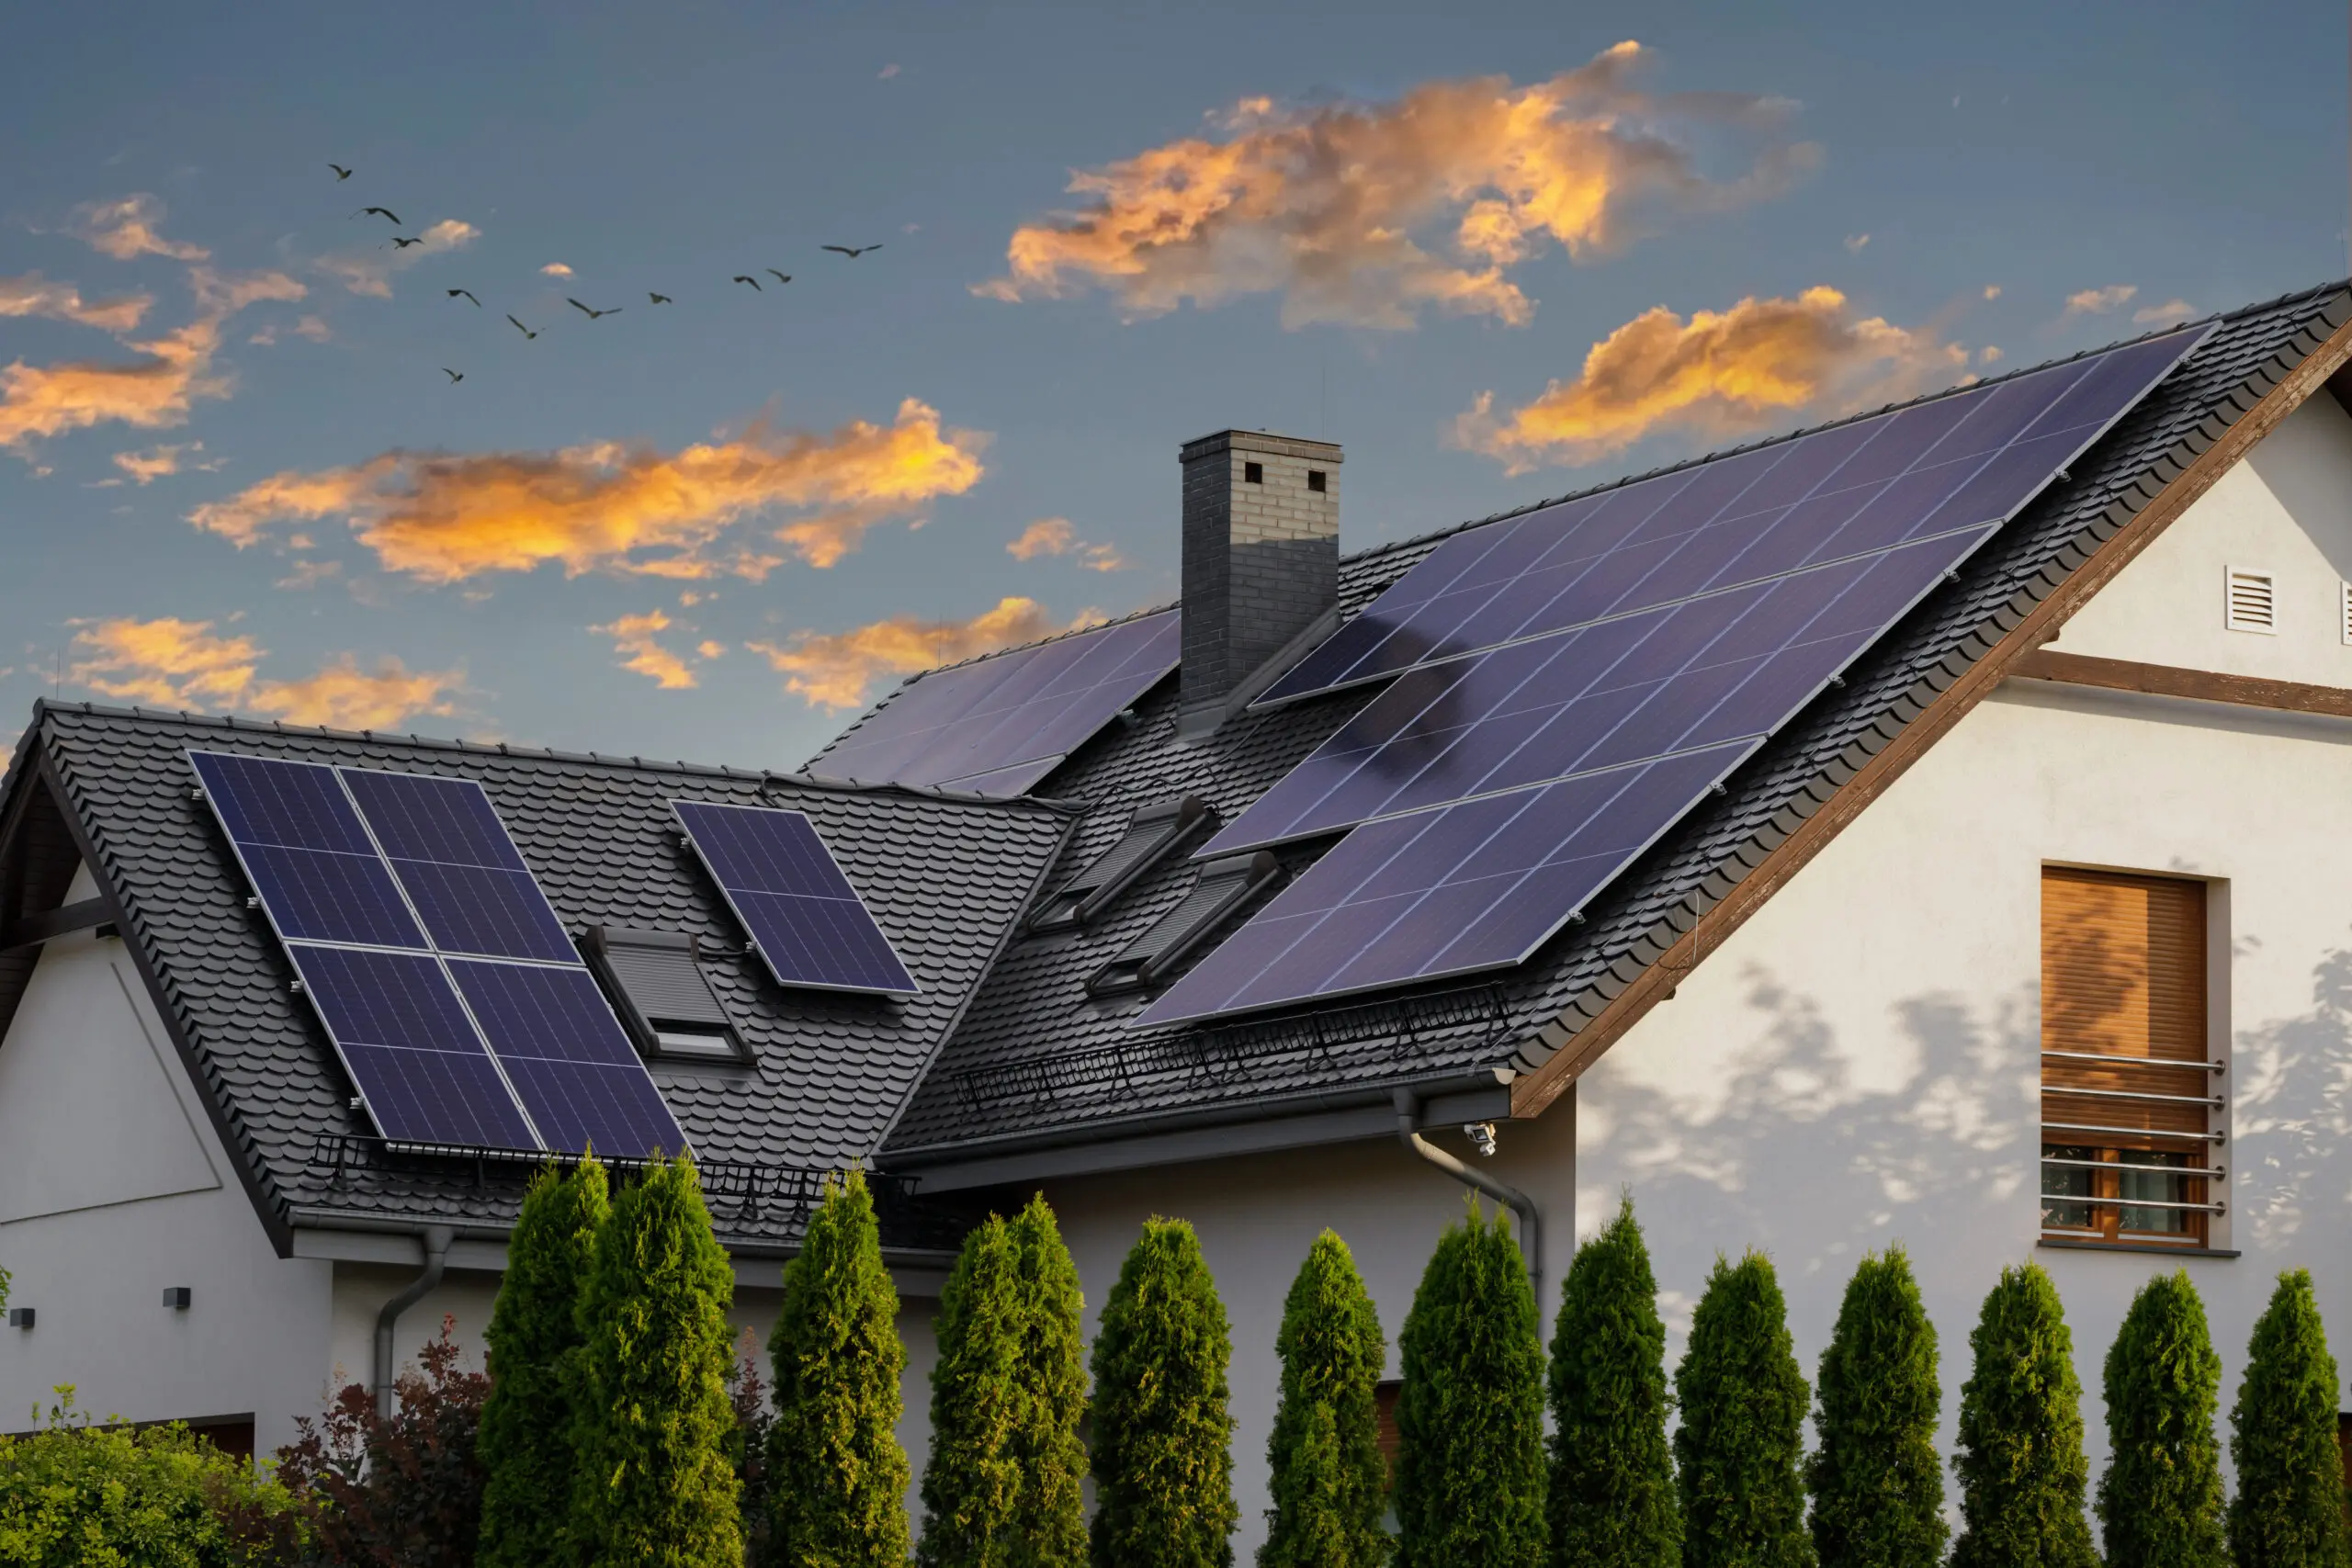 do solar panels increase home value in virginia - Does Virginia have net metering